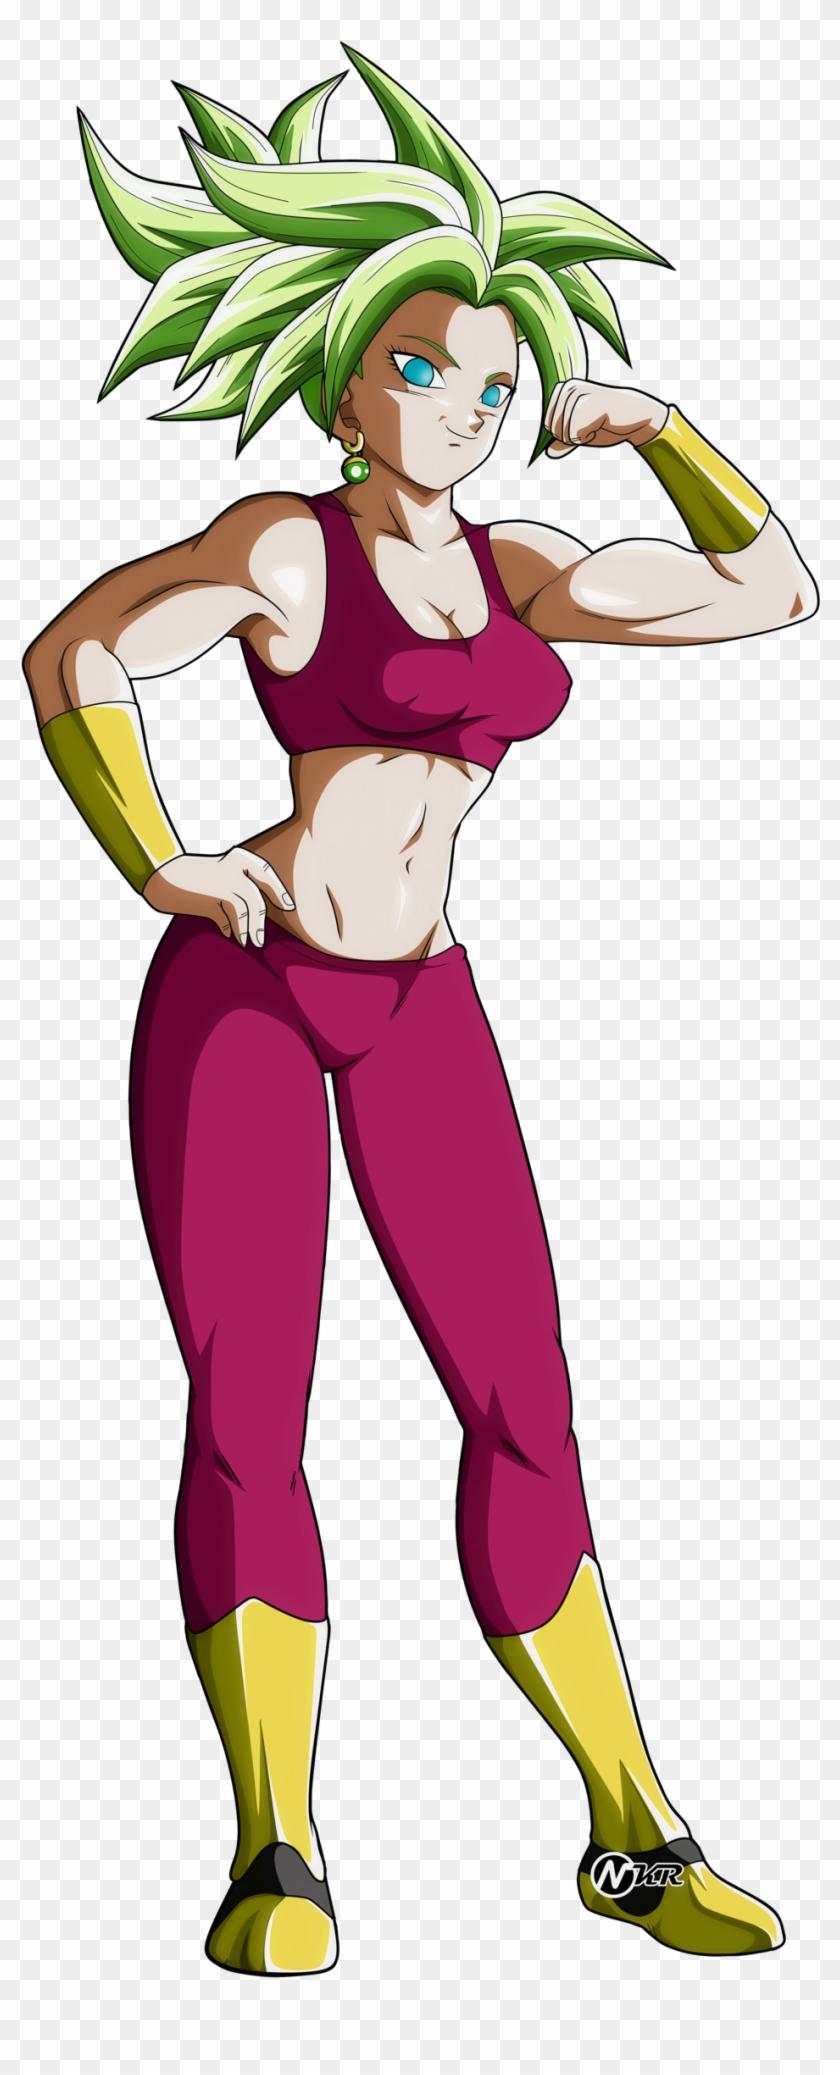 Goku Android 18 Majin Buu Bulma Trunks Clothing Fictional